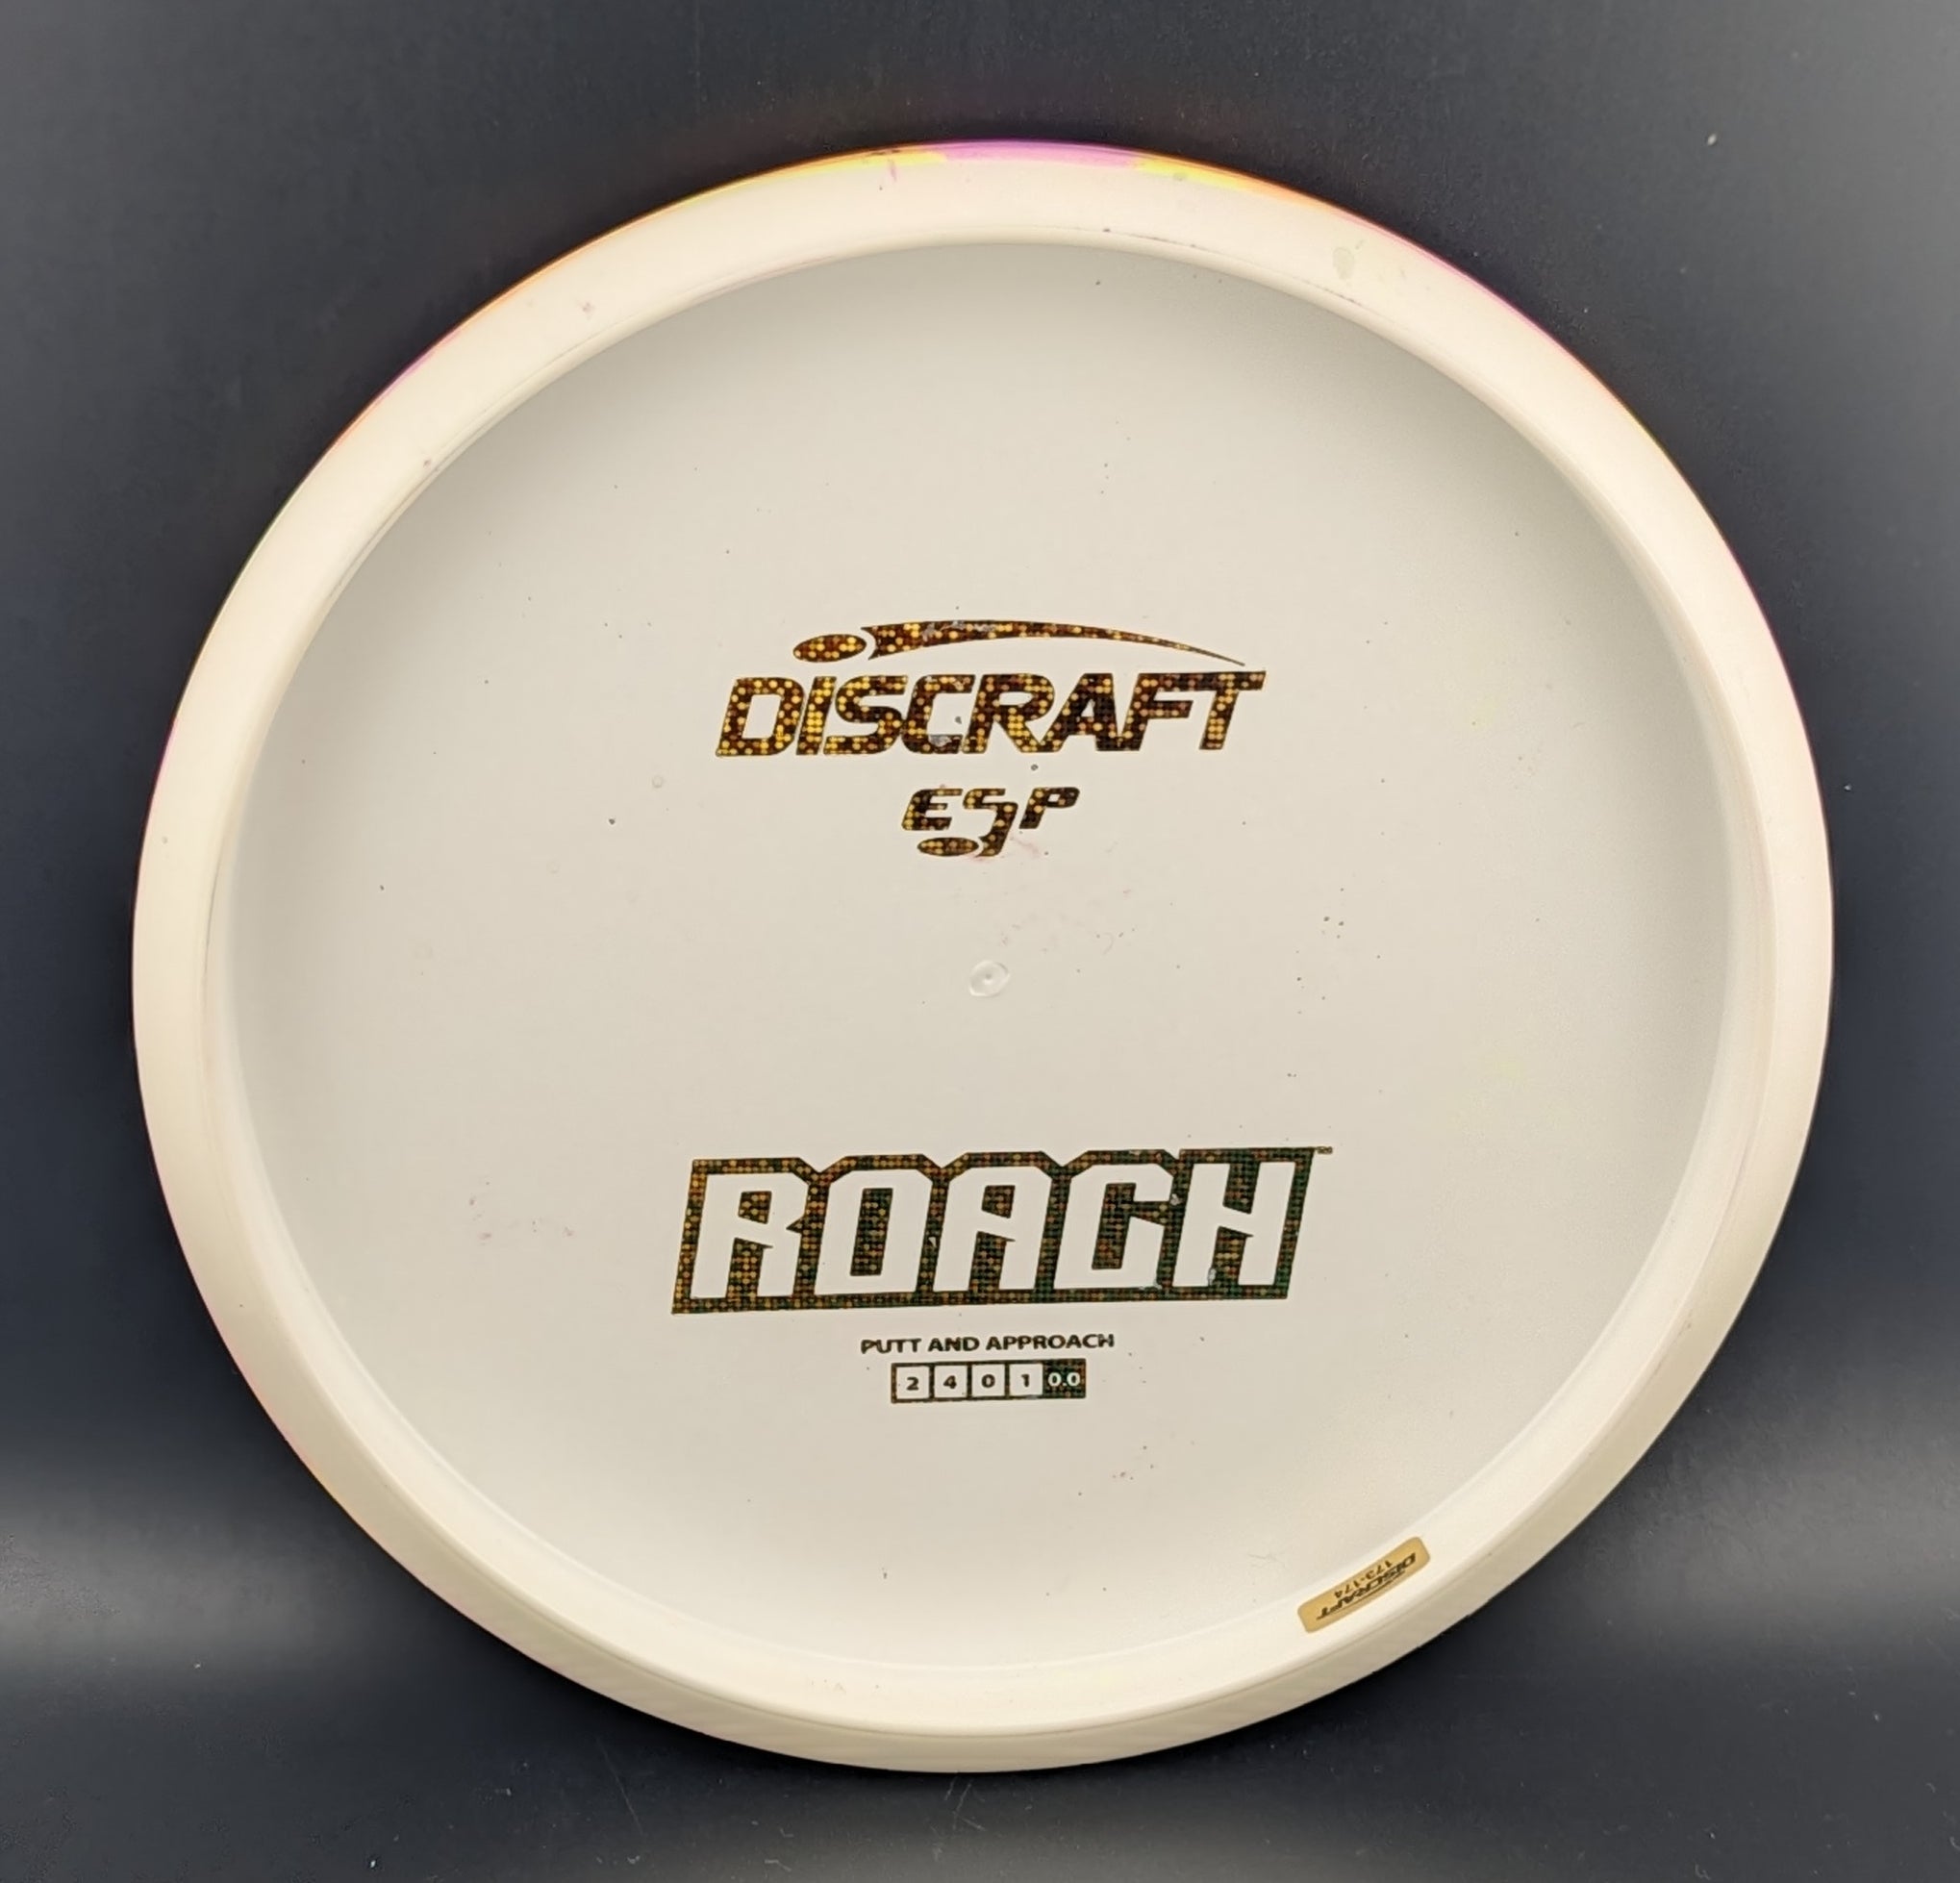 ESP Roach 174g - 0